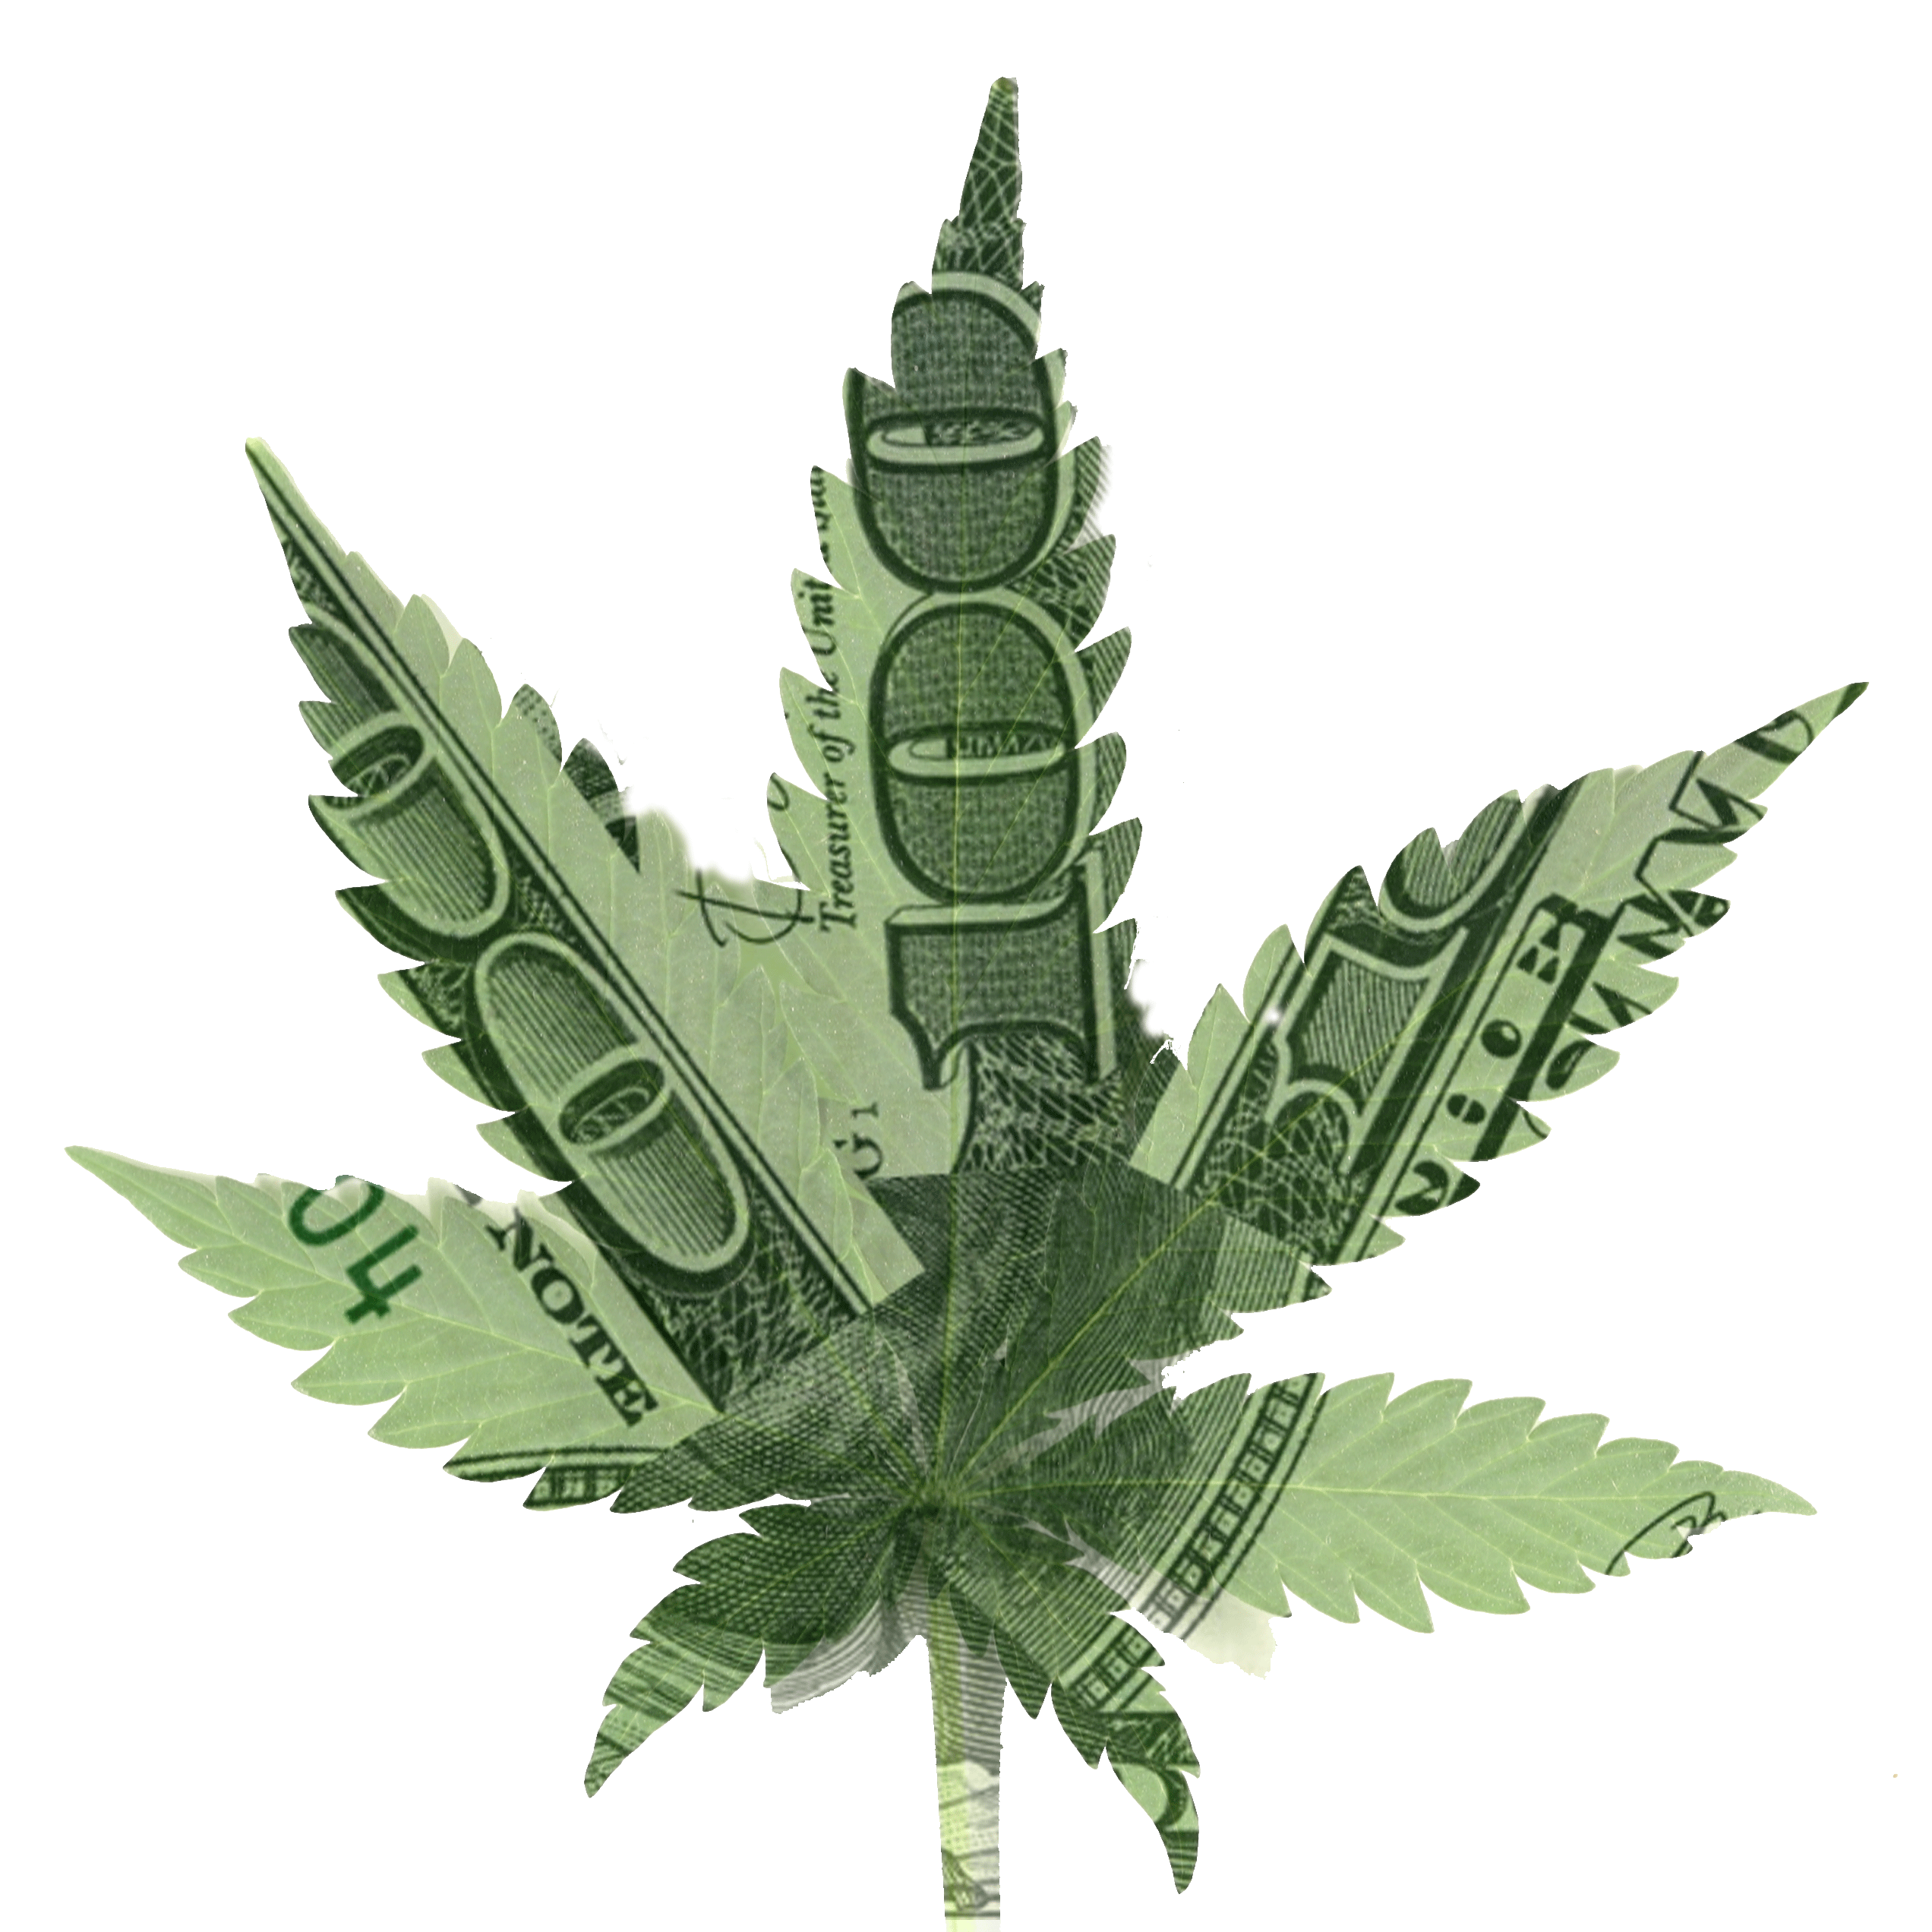 MARIJUANA! Image from Cannabis Capital Investment Club.